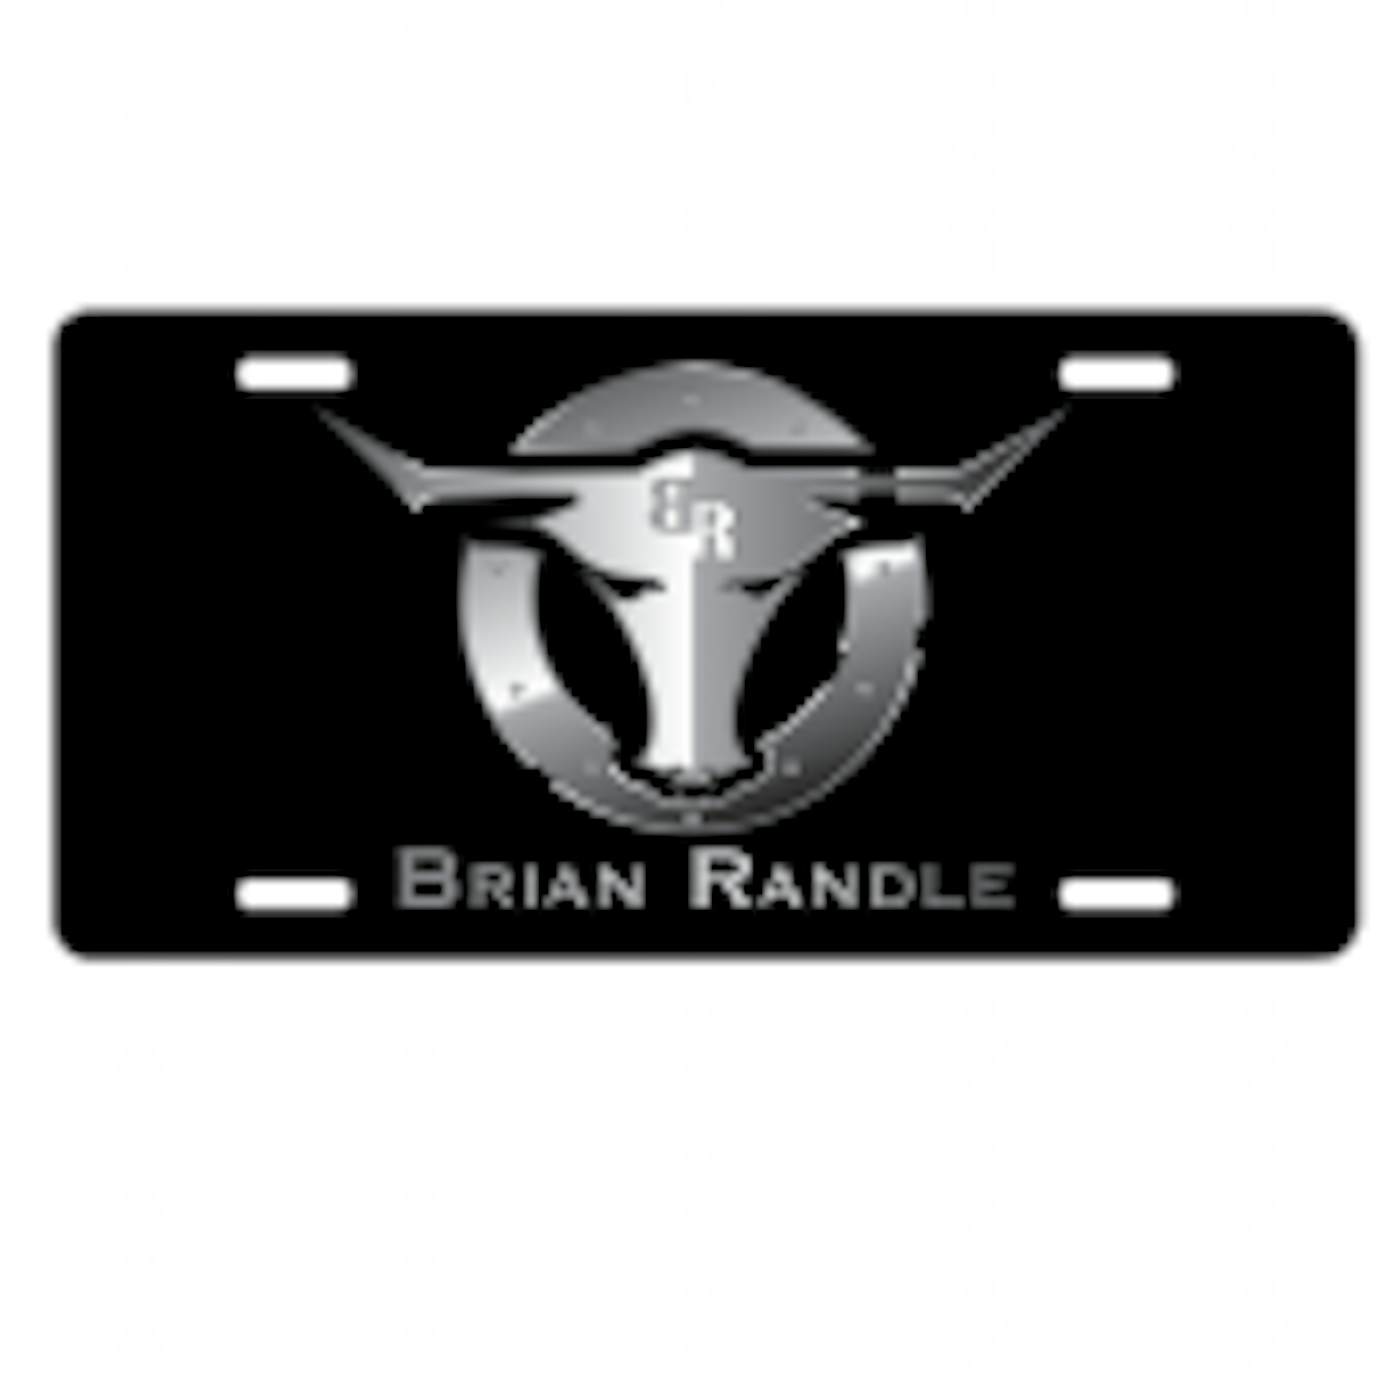 Brian Randle License Plate